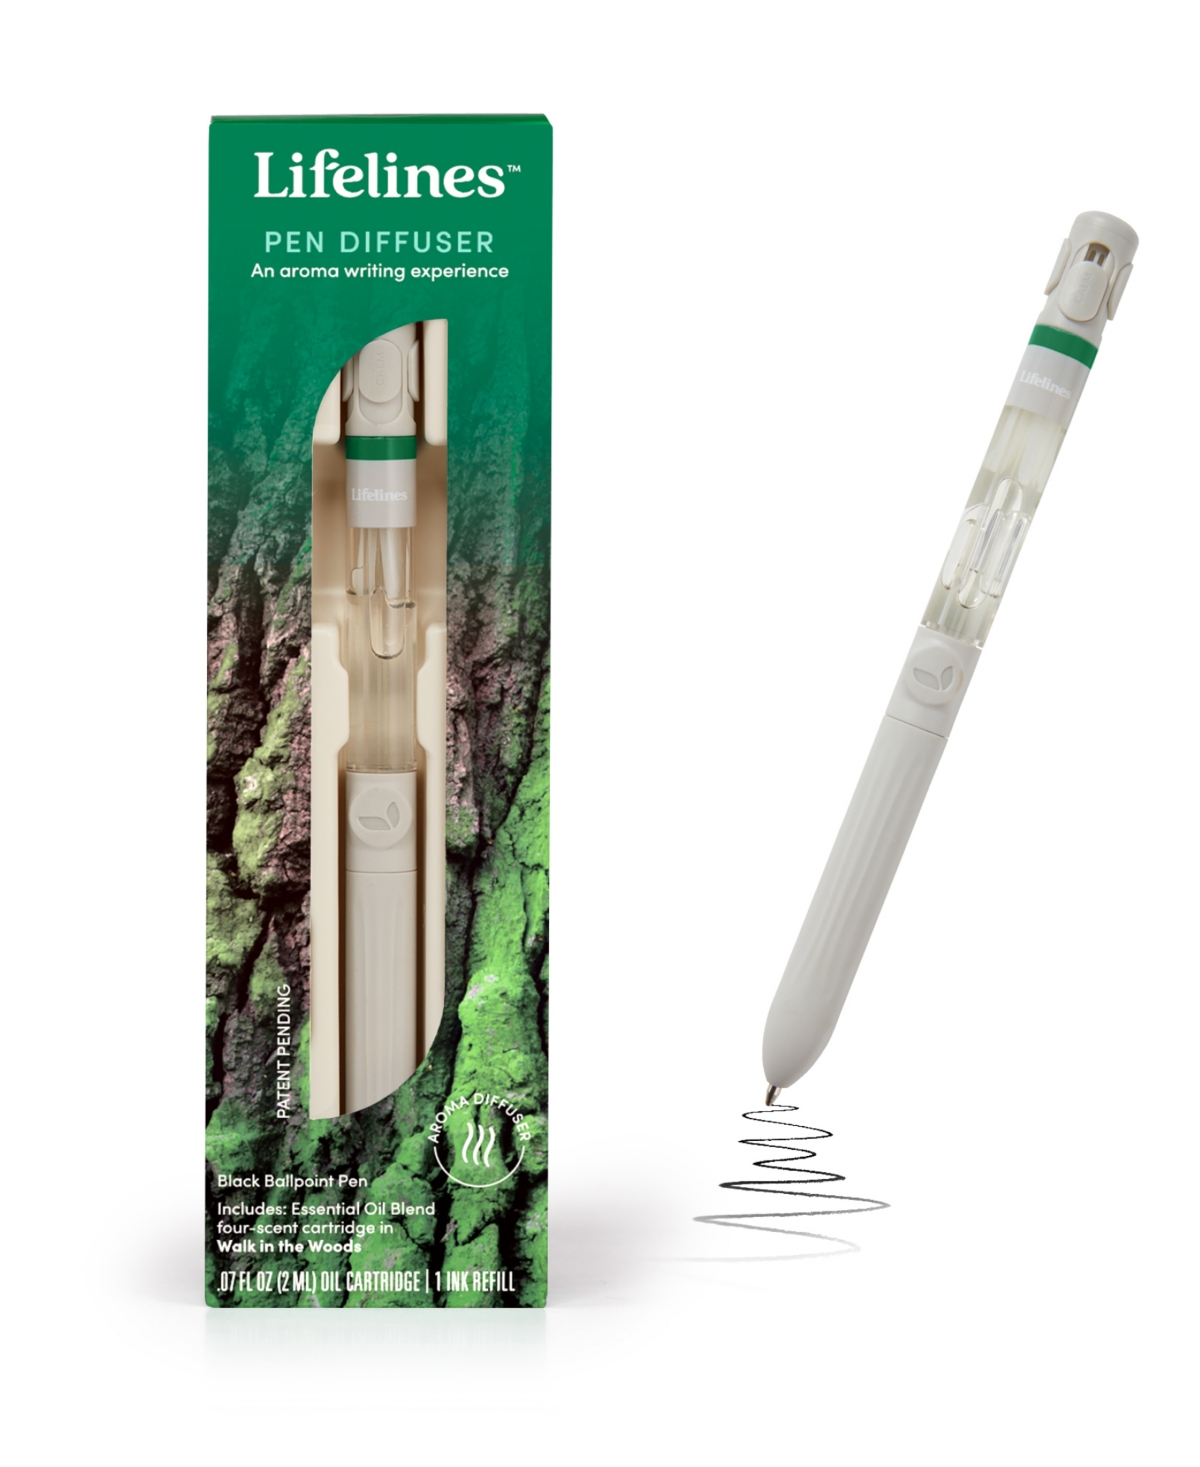 Lifelines Pen Diffuser With 4 Scent Cartridge In Walk In The Woods In Green